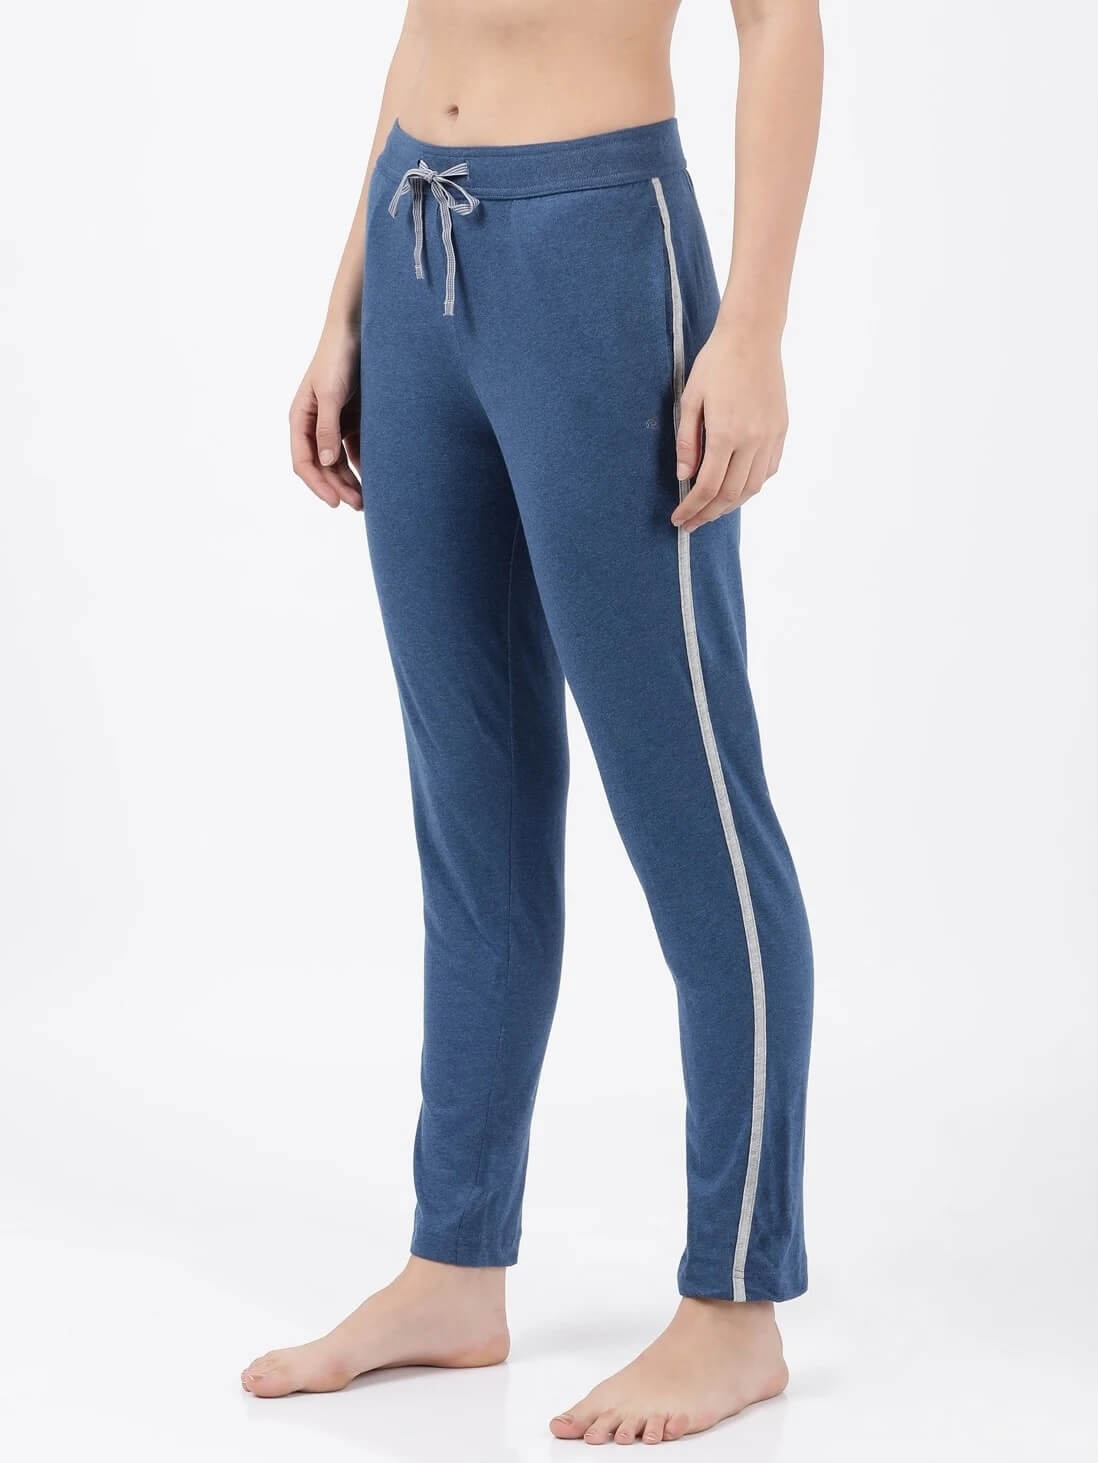 Buy Jockey Women Regular fit Cotton Solid Track pants - Blue Online |Paytm  Mall